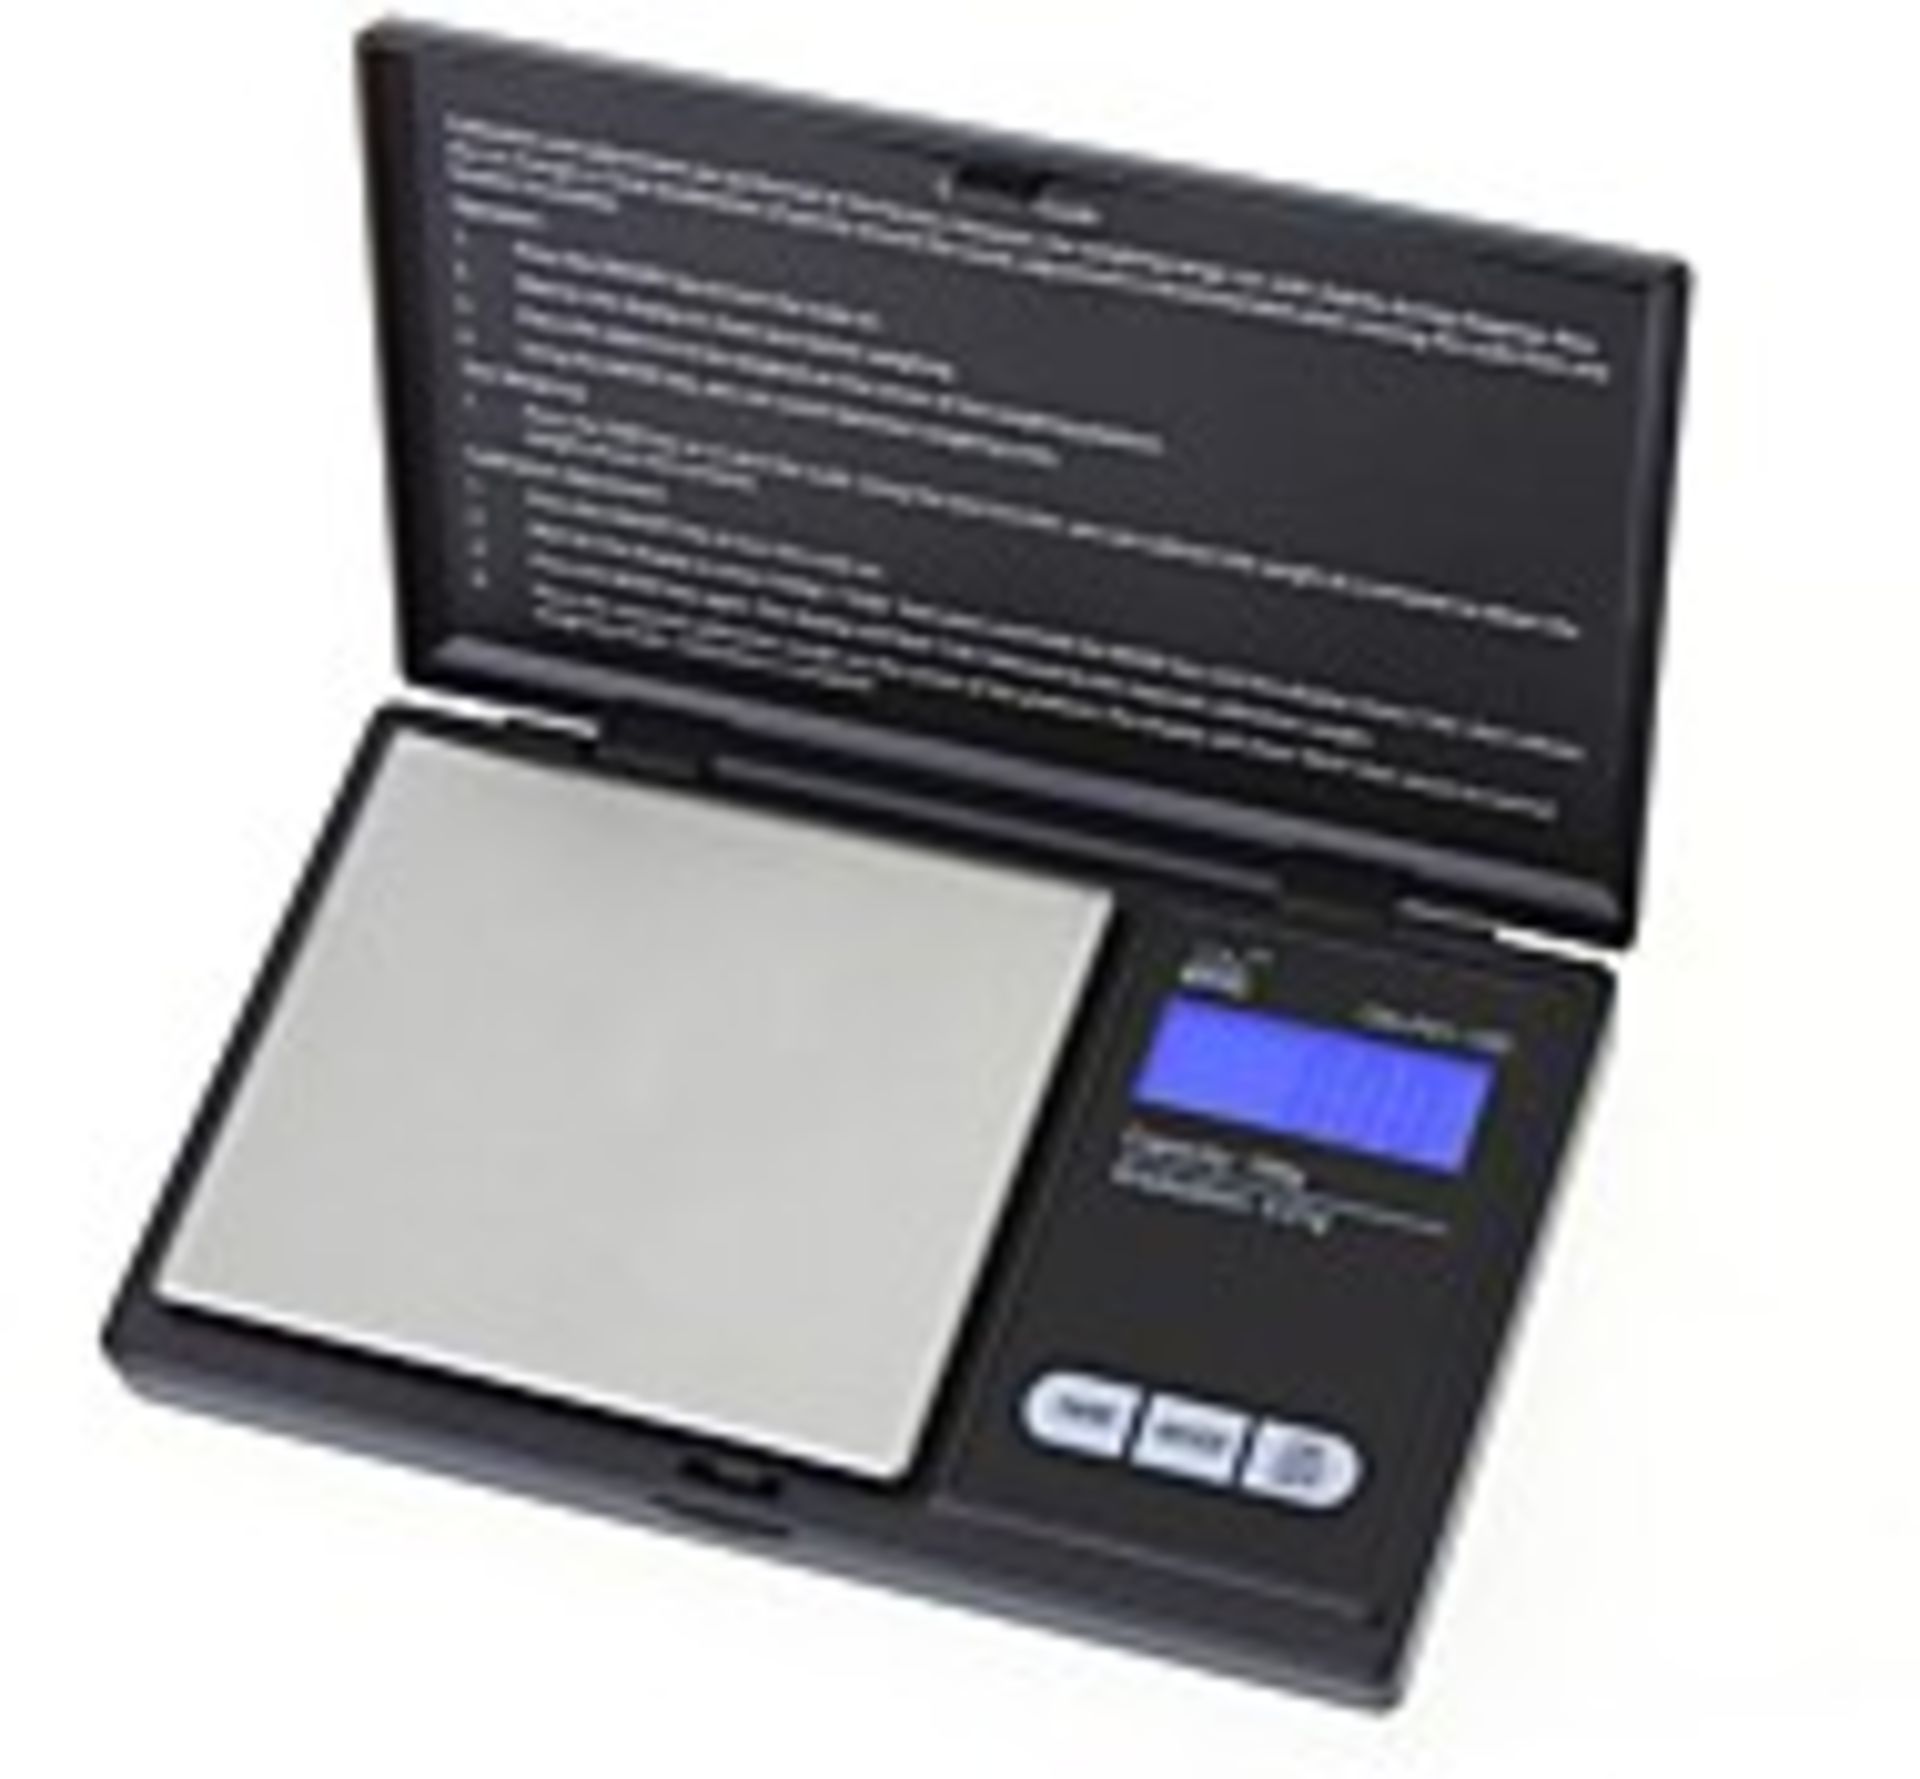 V Brand New Professional Digital Mini Scales (500 gram x 0.1 gram) X 2 YOUR BID PRICE TO BE